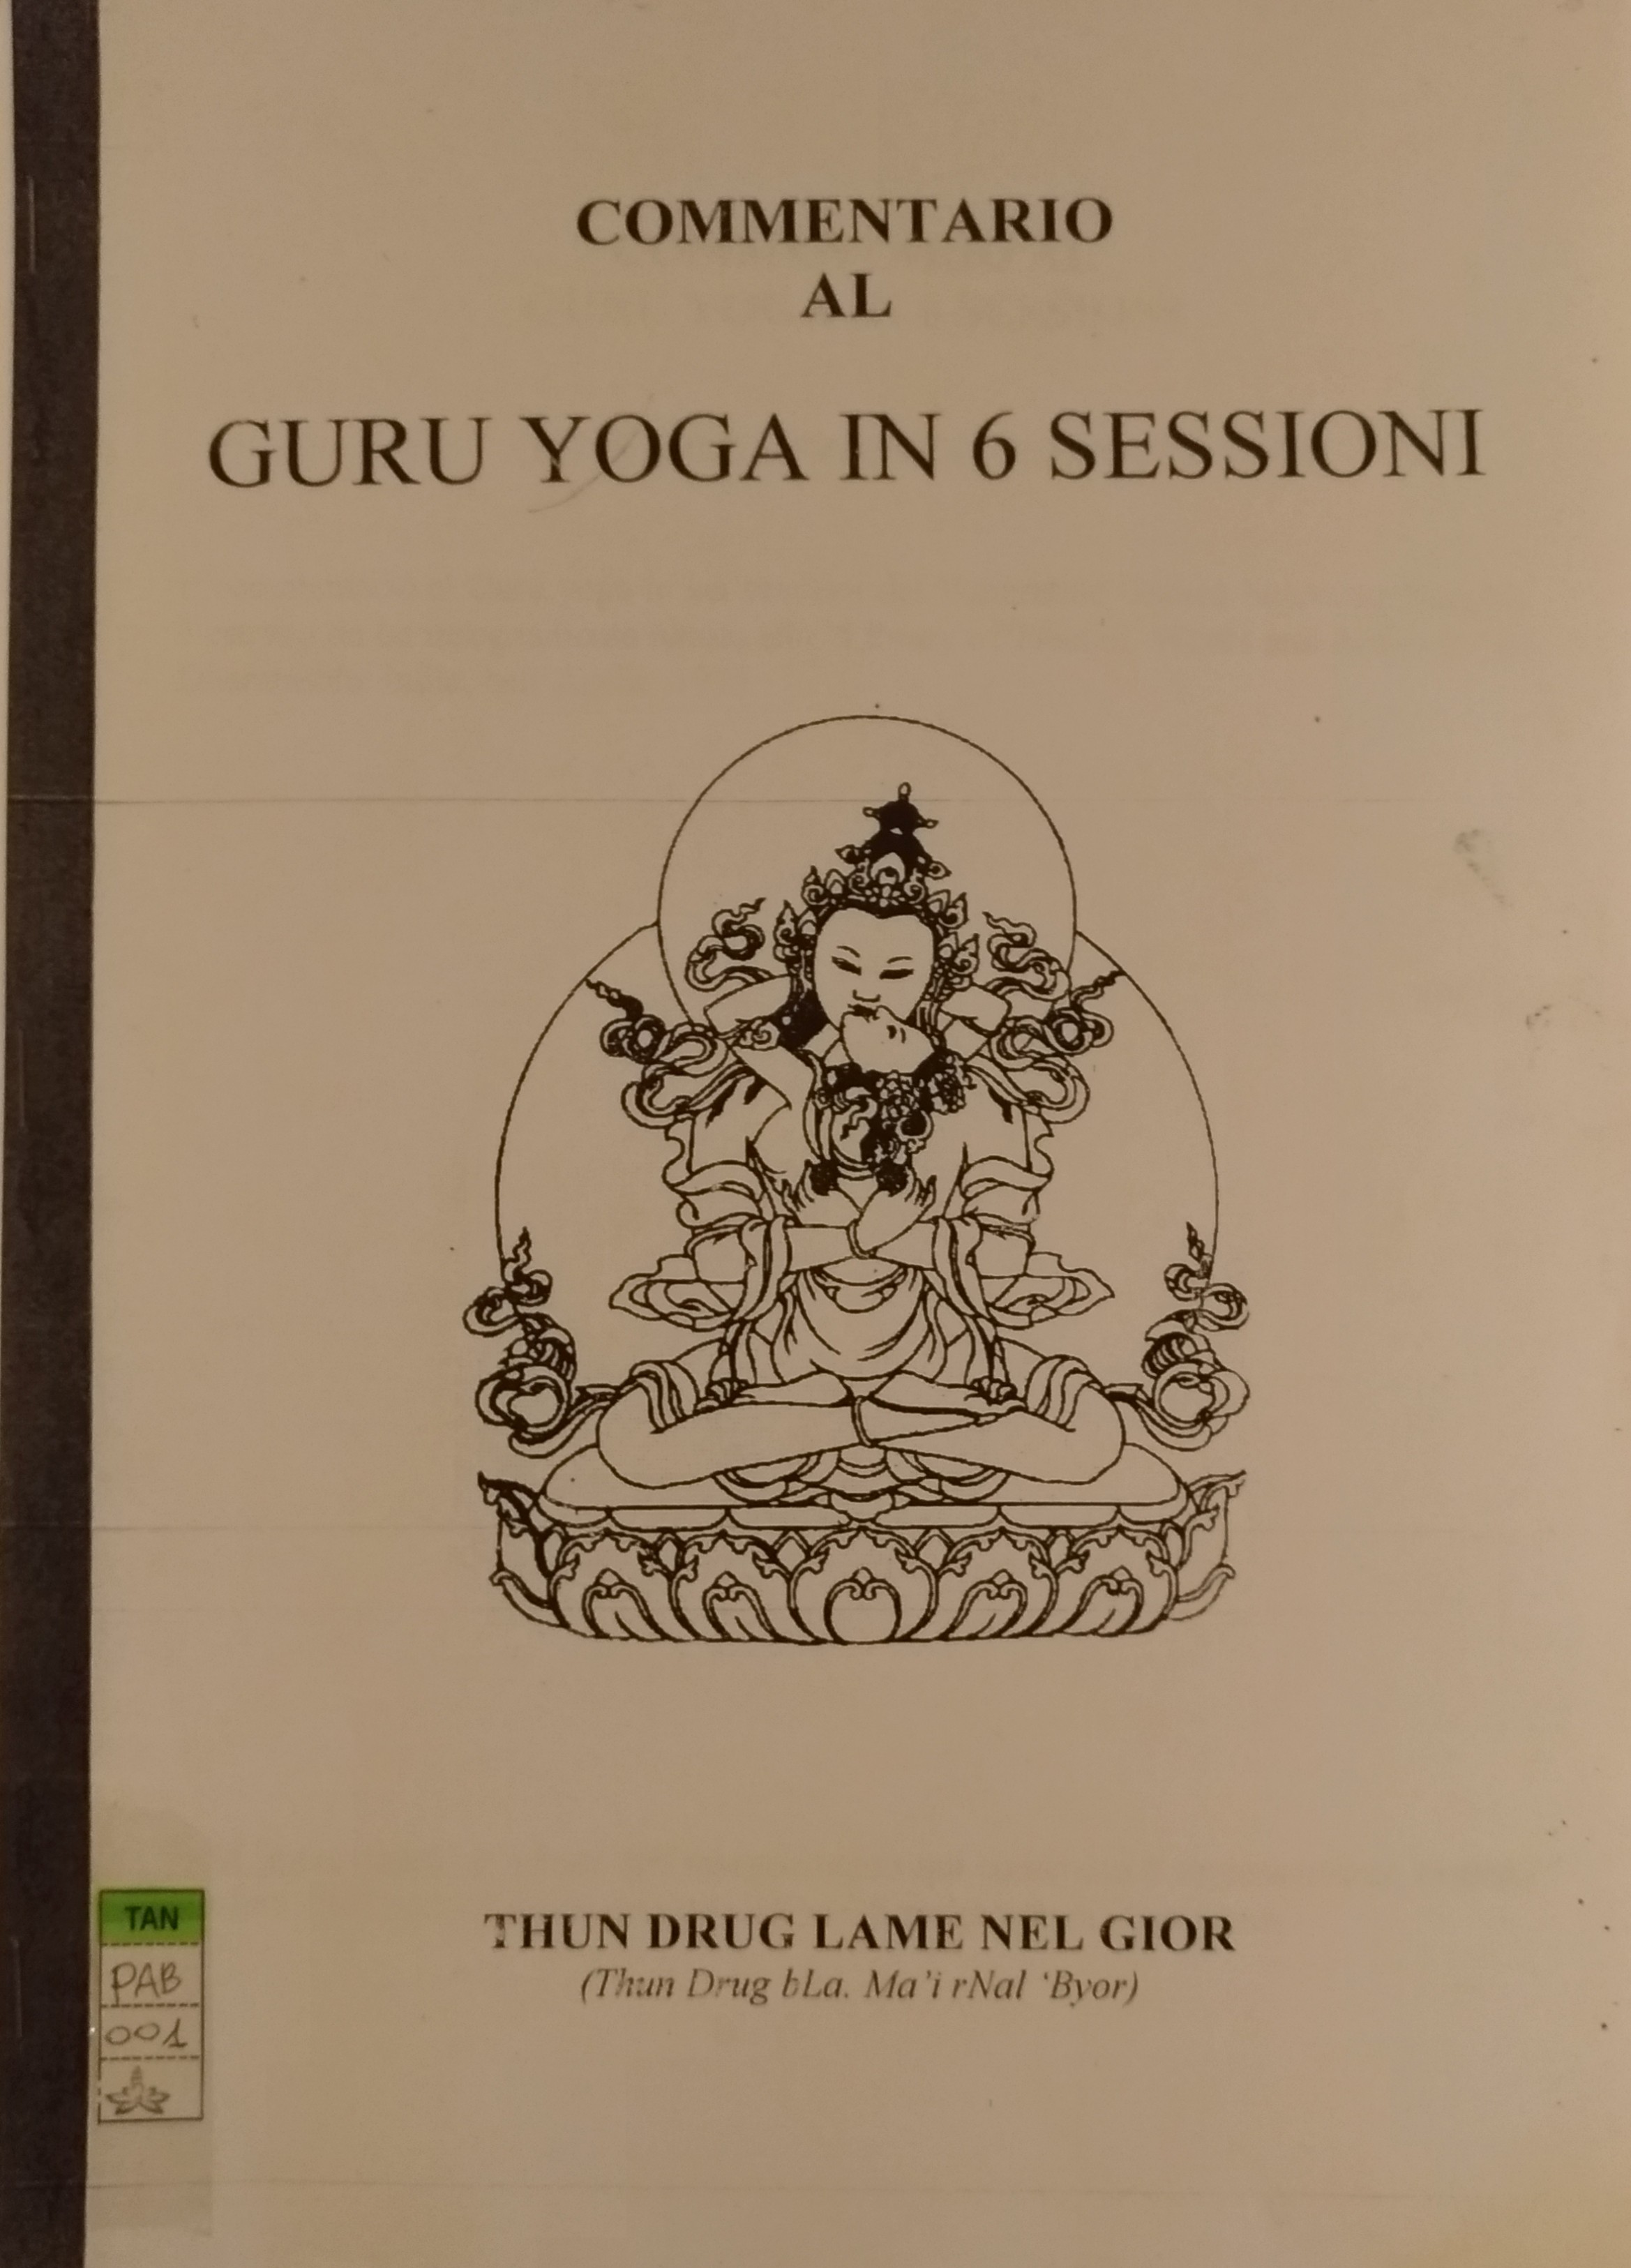 Commentario al Guru Yoga in 6 sessioni